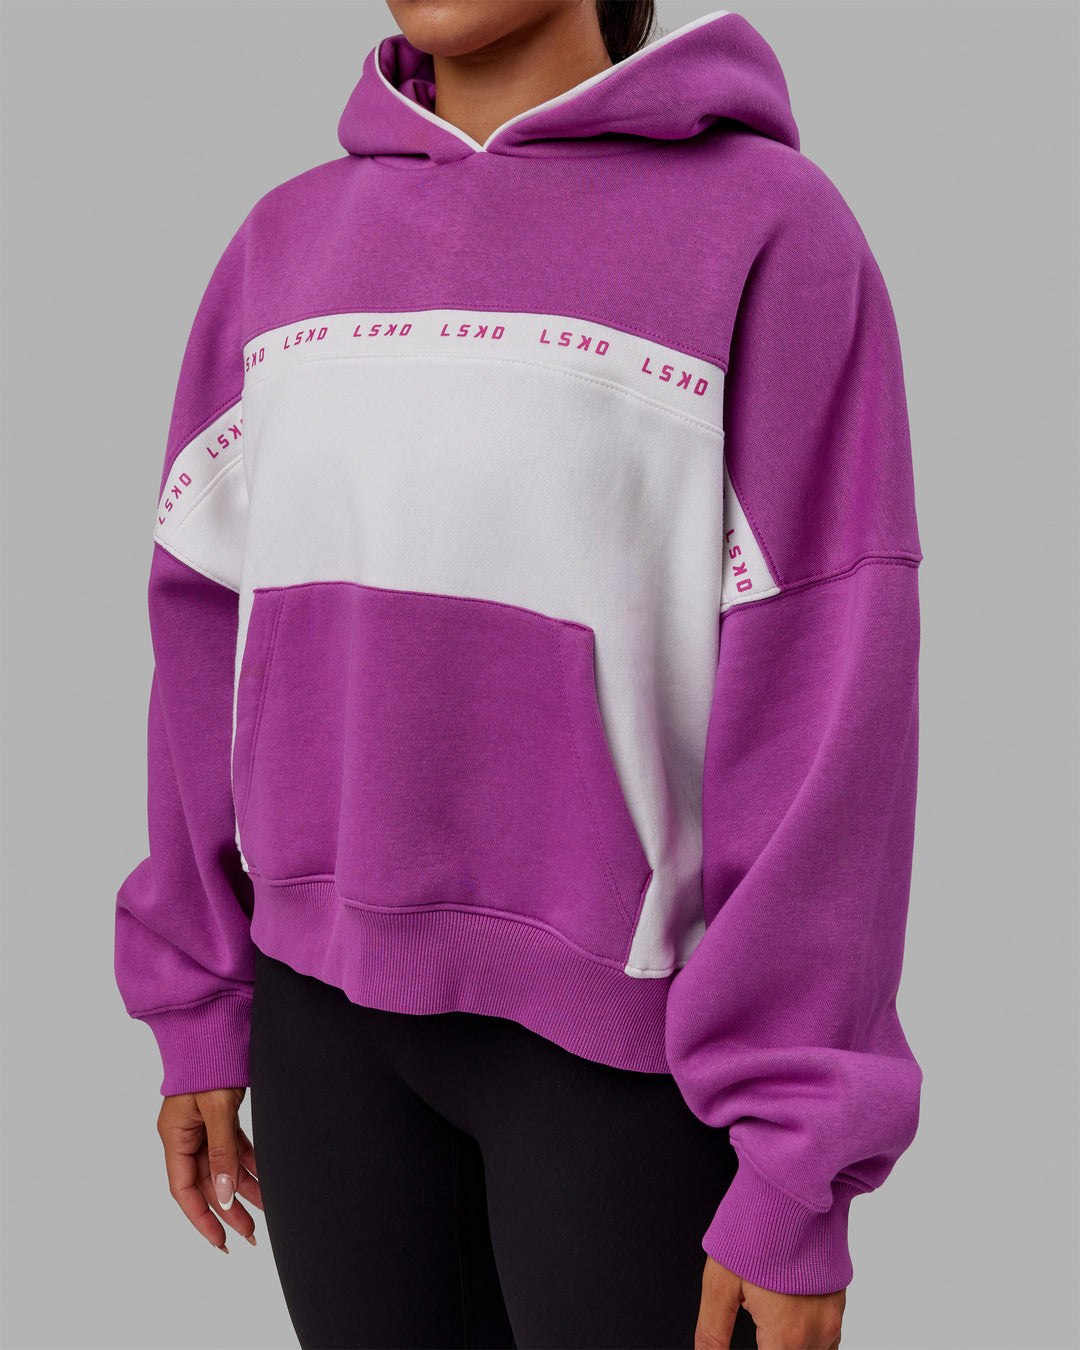 Woman wearing Extend Hoodie - Hyper Violet-White